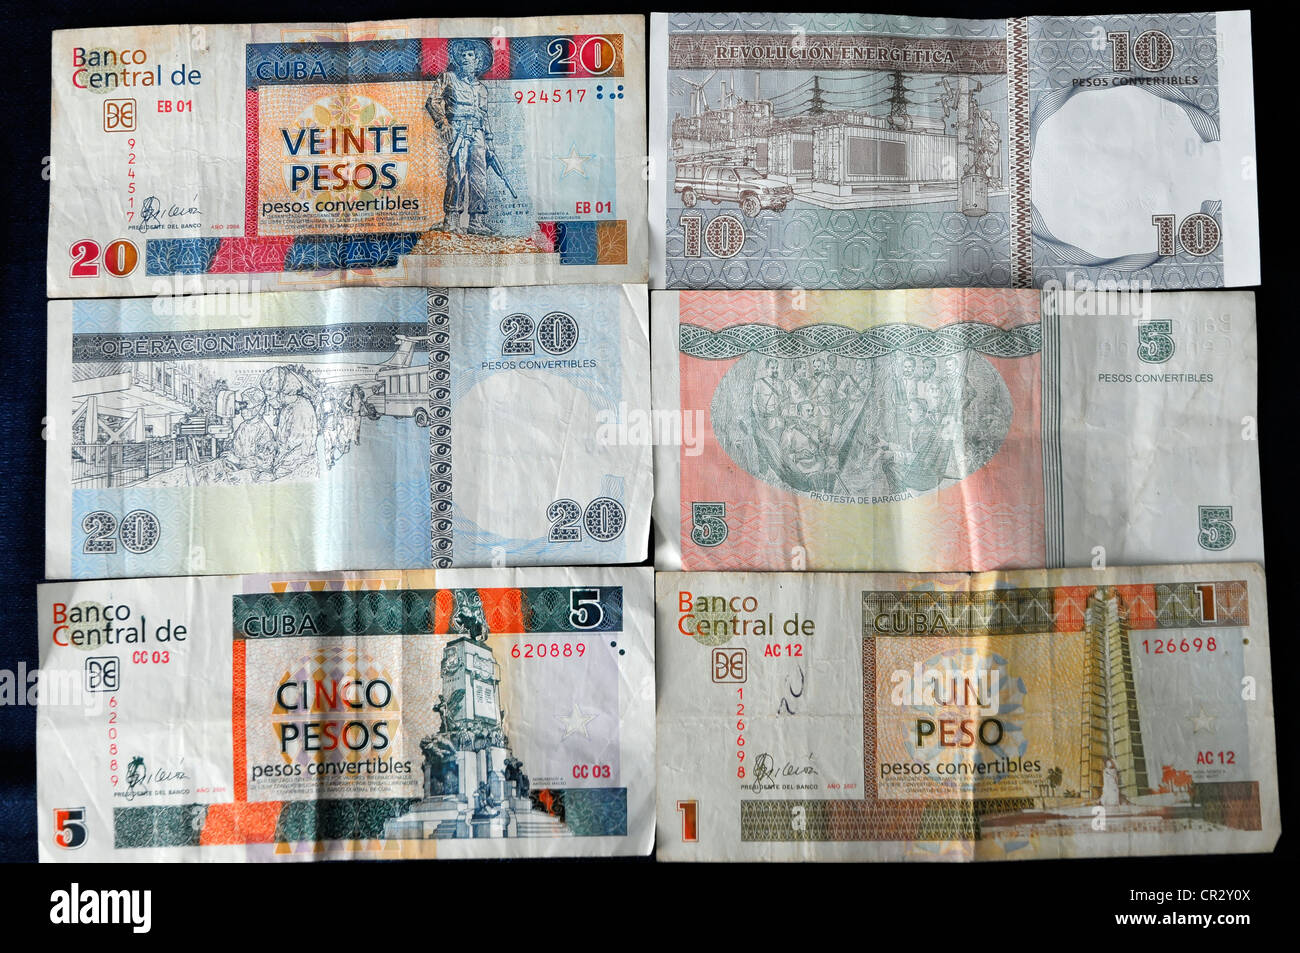 Banknotes, Peso convertible, convertible Pesos, notes 20, 10, 5, 1 CUC, tourist currency, Cuba, Greater Antilles, Caribbean Stock Photo